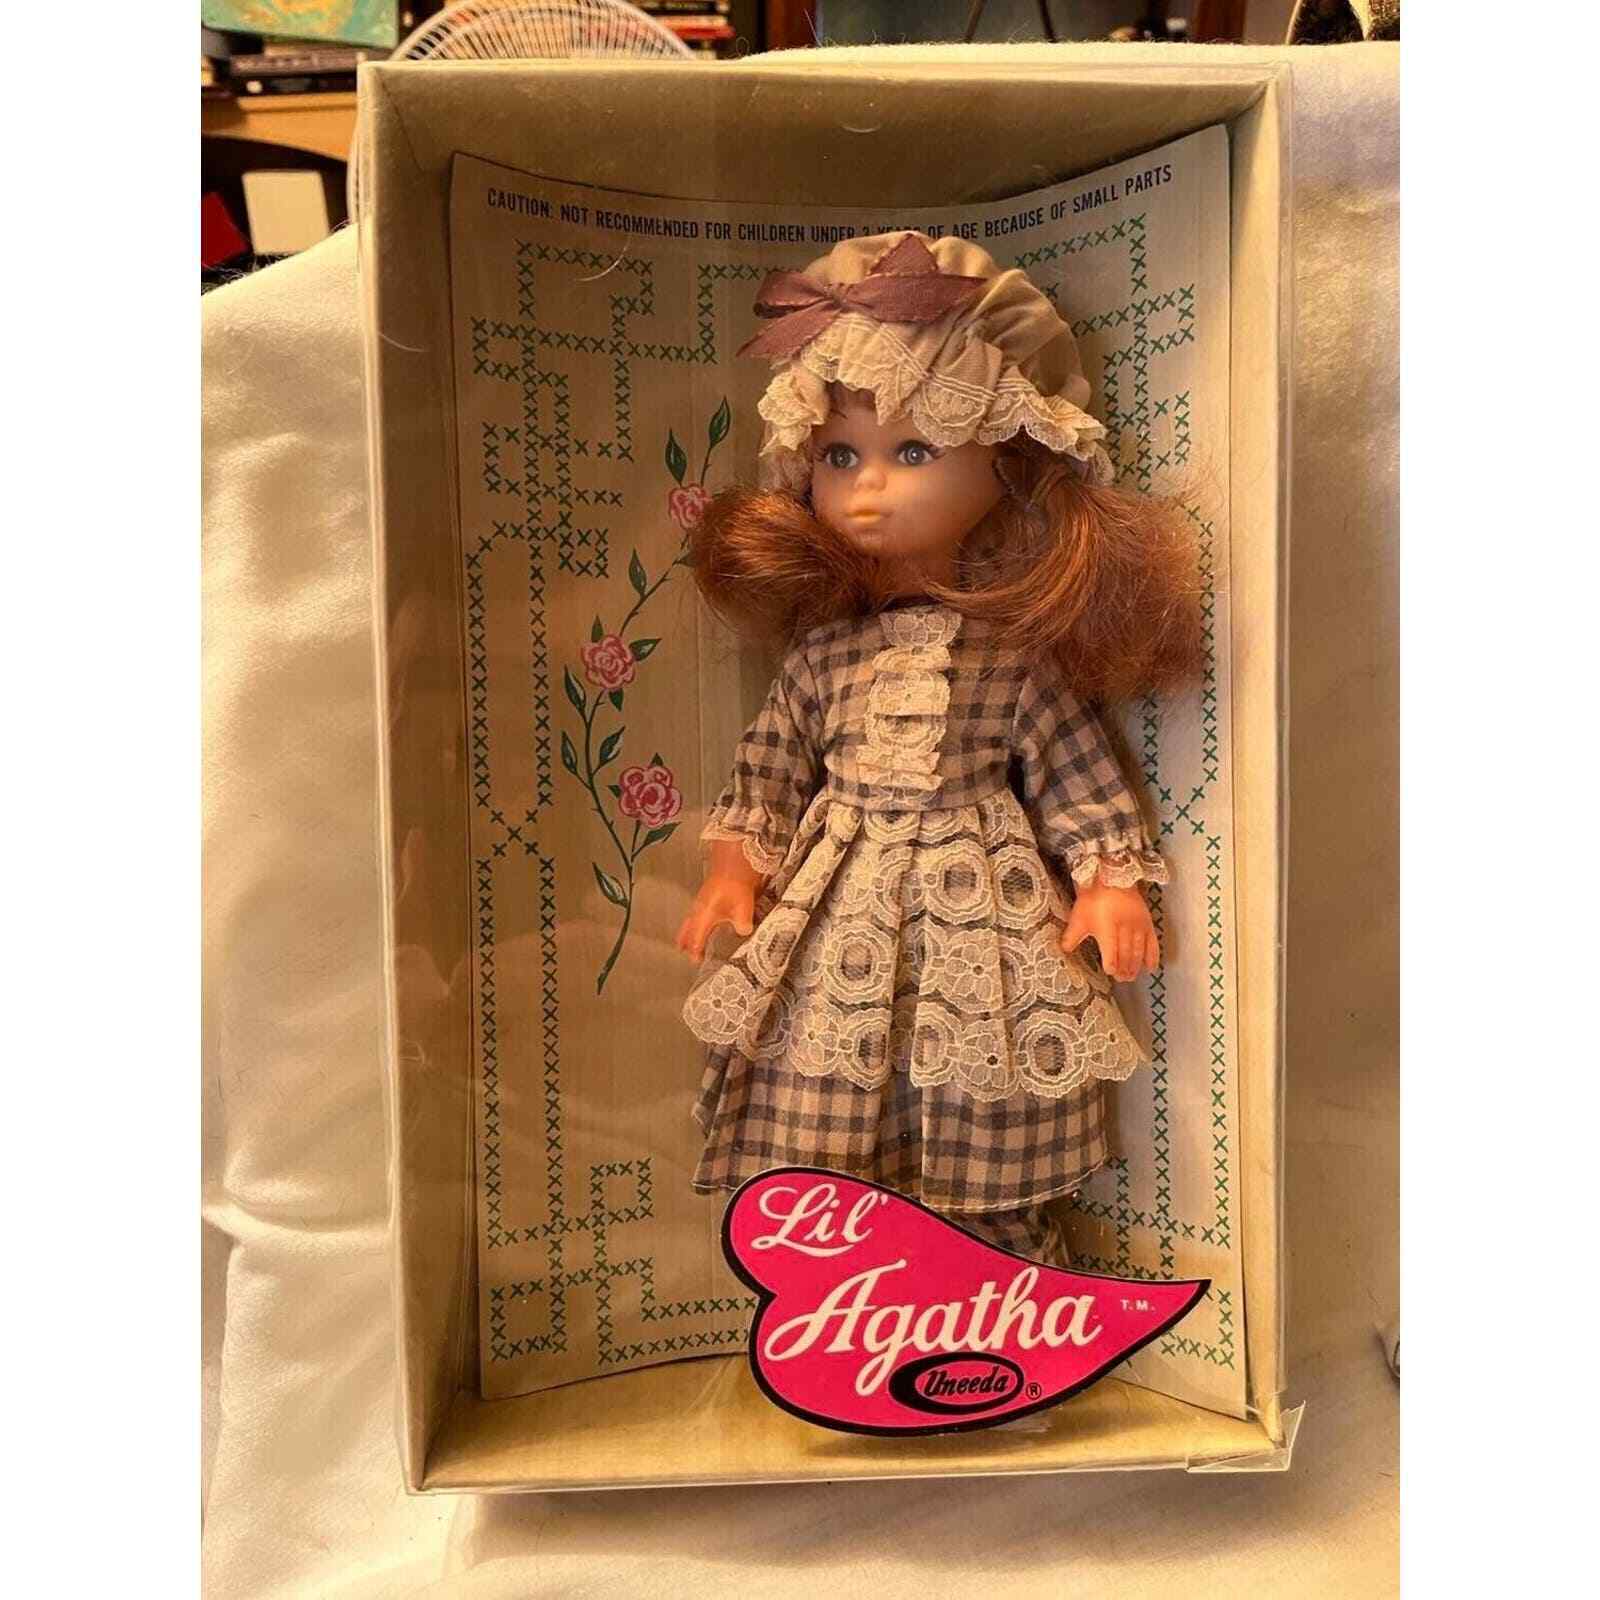 Uneeda Lil' Agatha Early Americana Style Doll in Box REDHEAD Style 71050 IN BOX